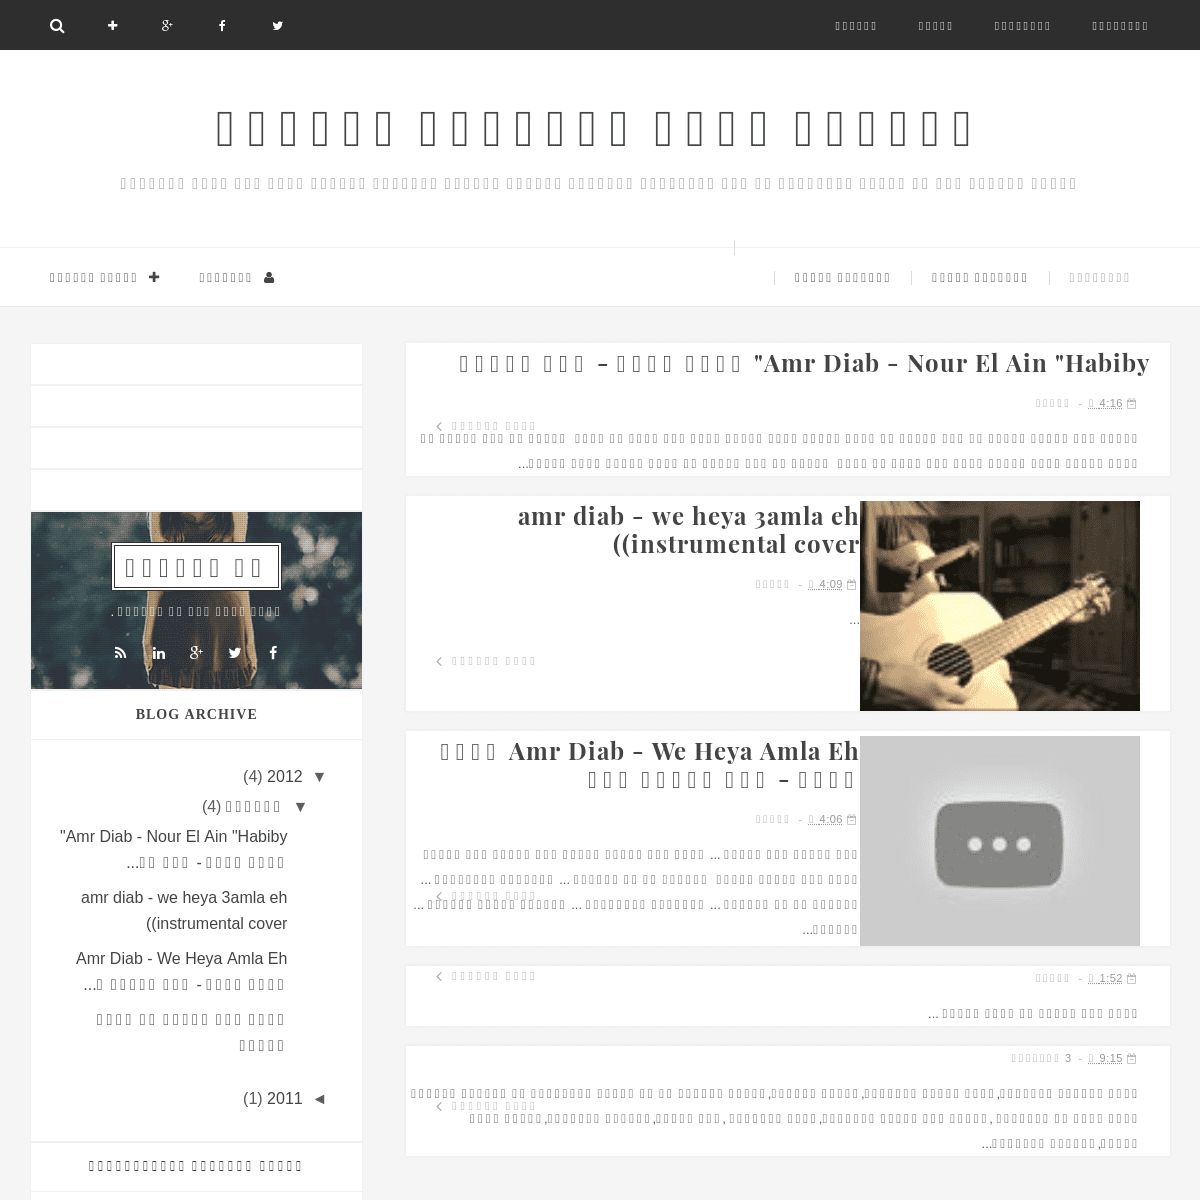 A complete backup of guitare-e.blogspot.com